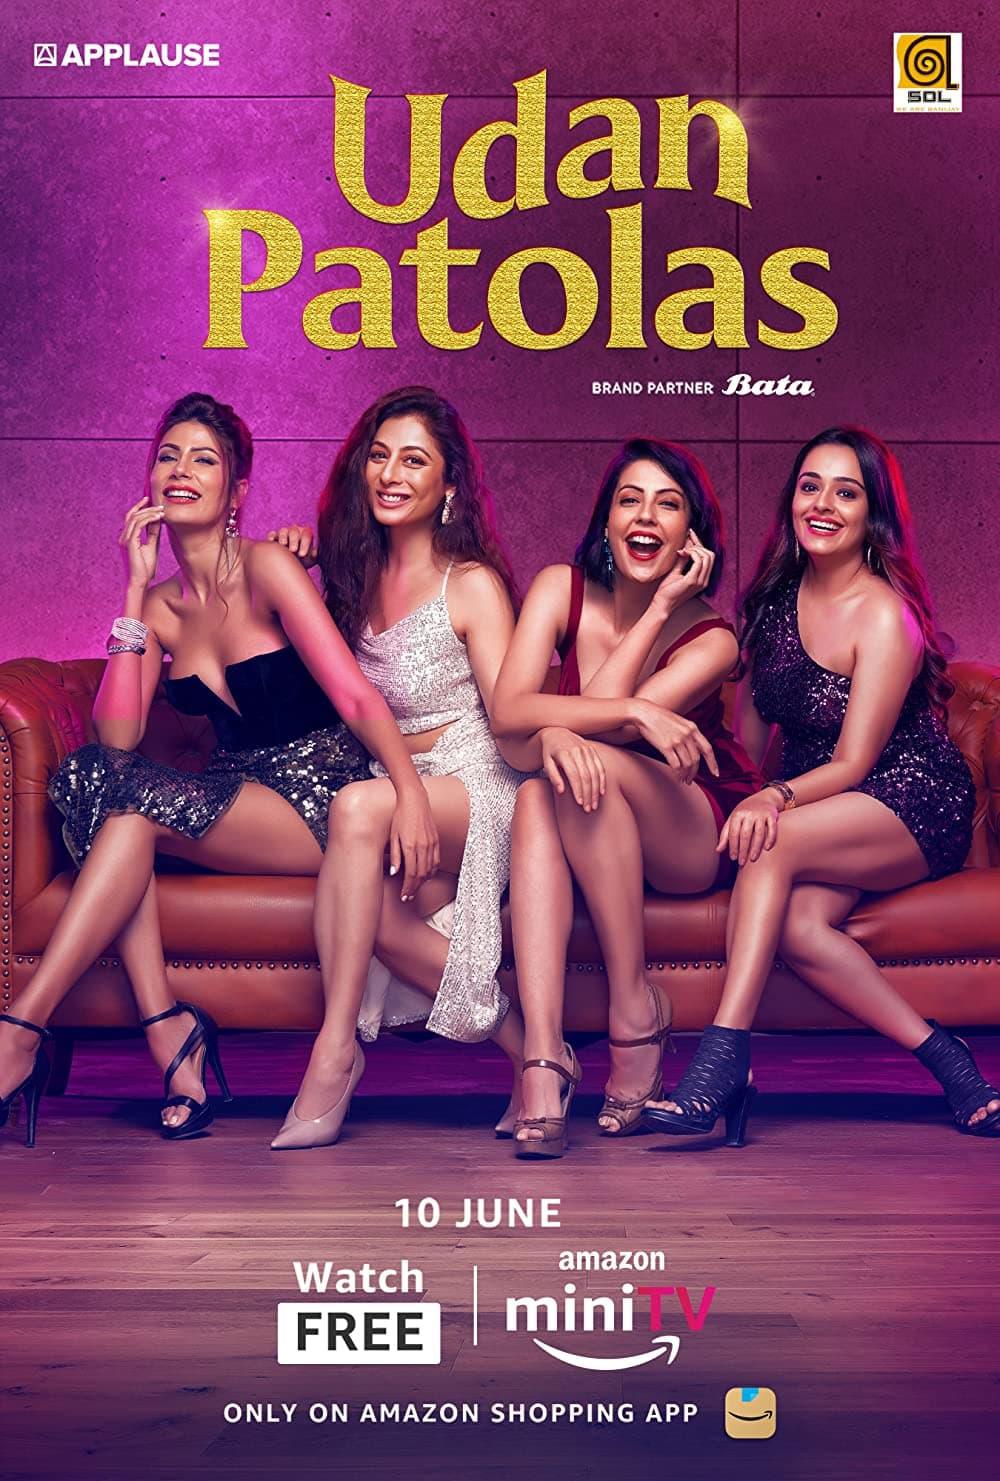 TV ratings for Udan Patolas in Mexico. Amazon mini TV TV series